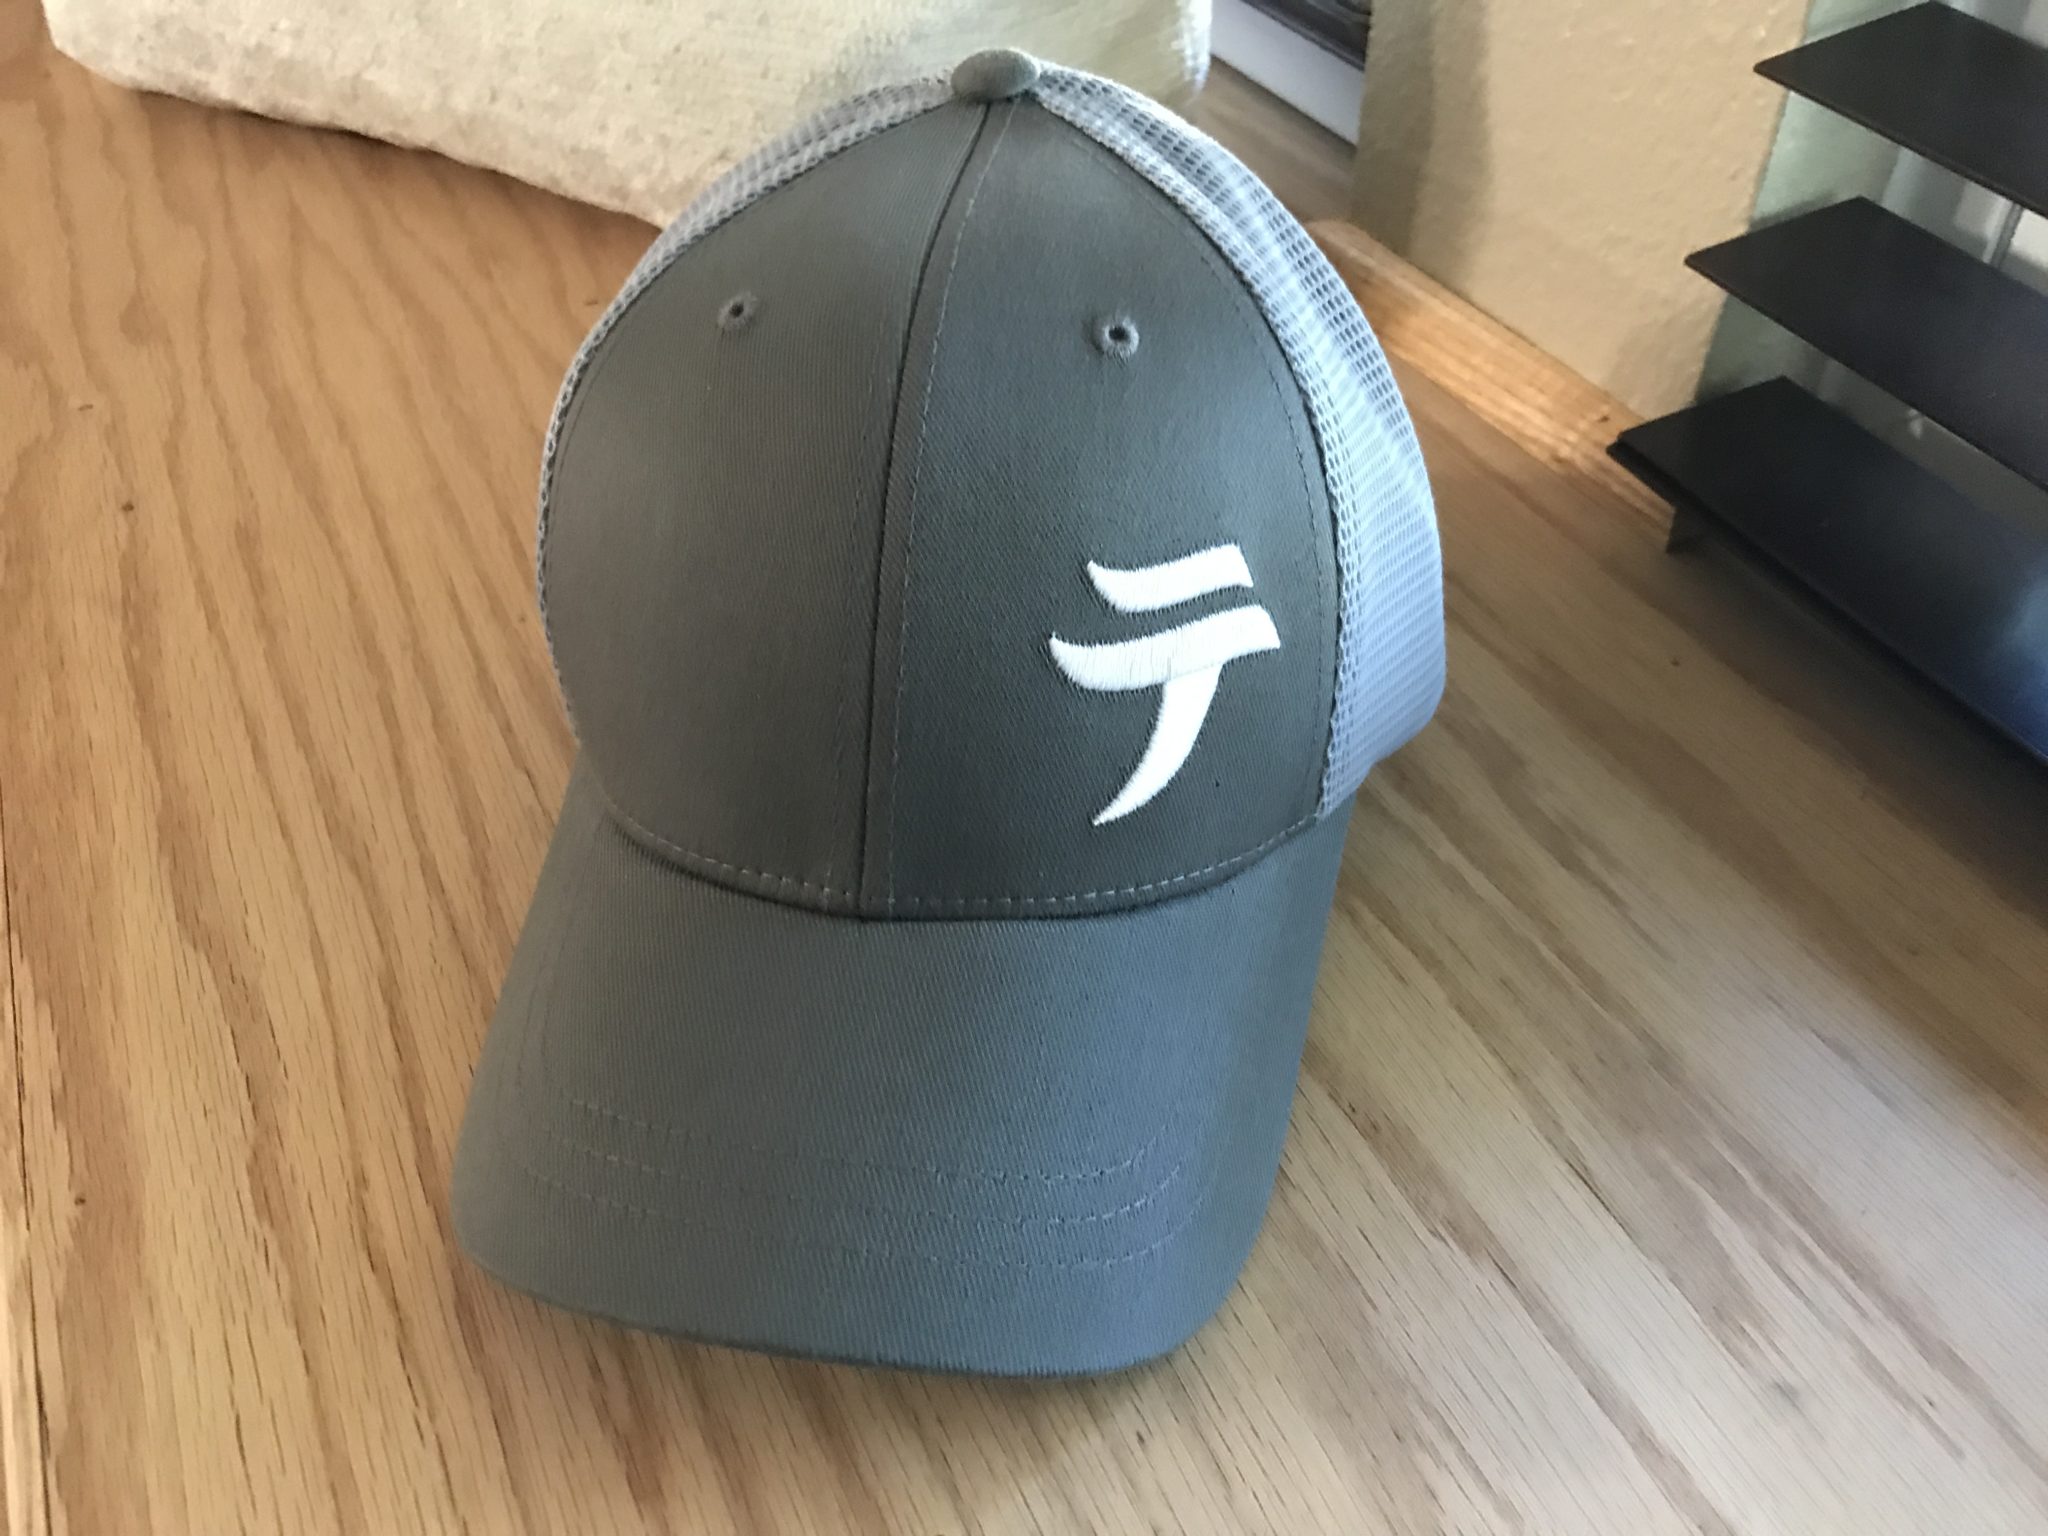 Mangled Fly Trucker Hat - Fishing Cap